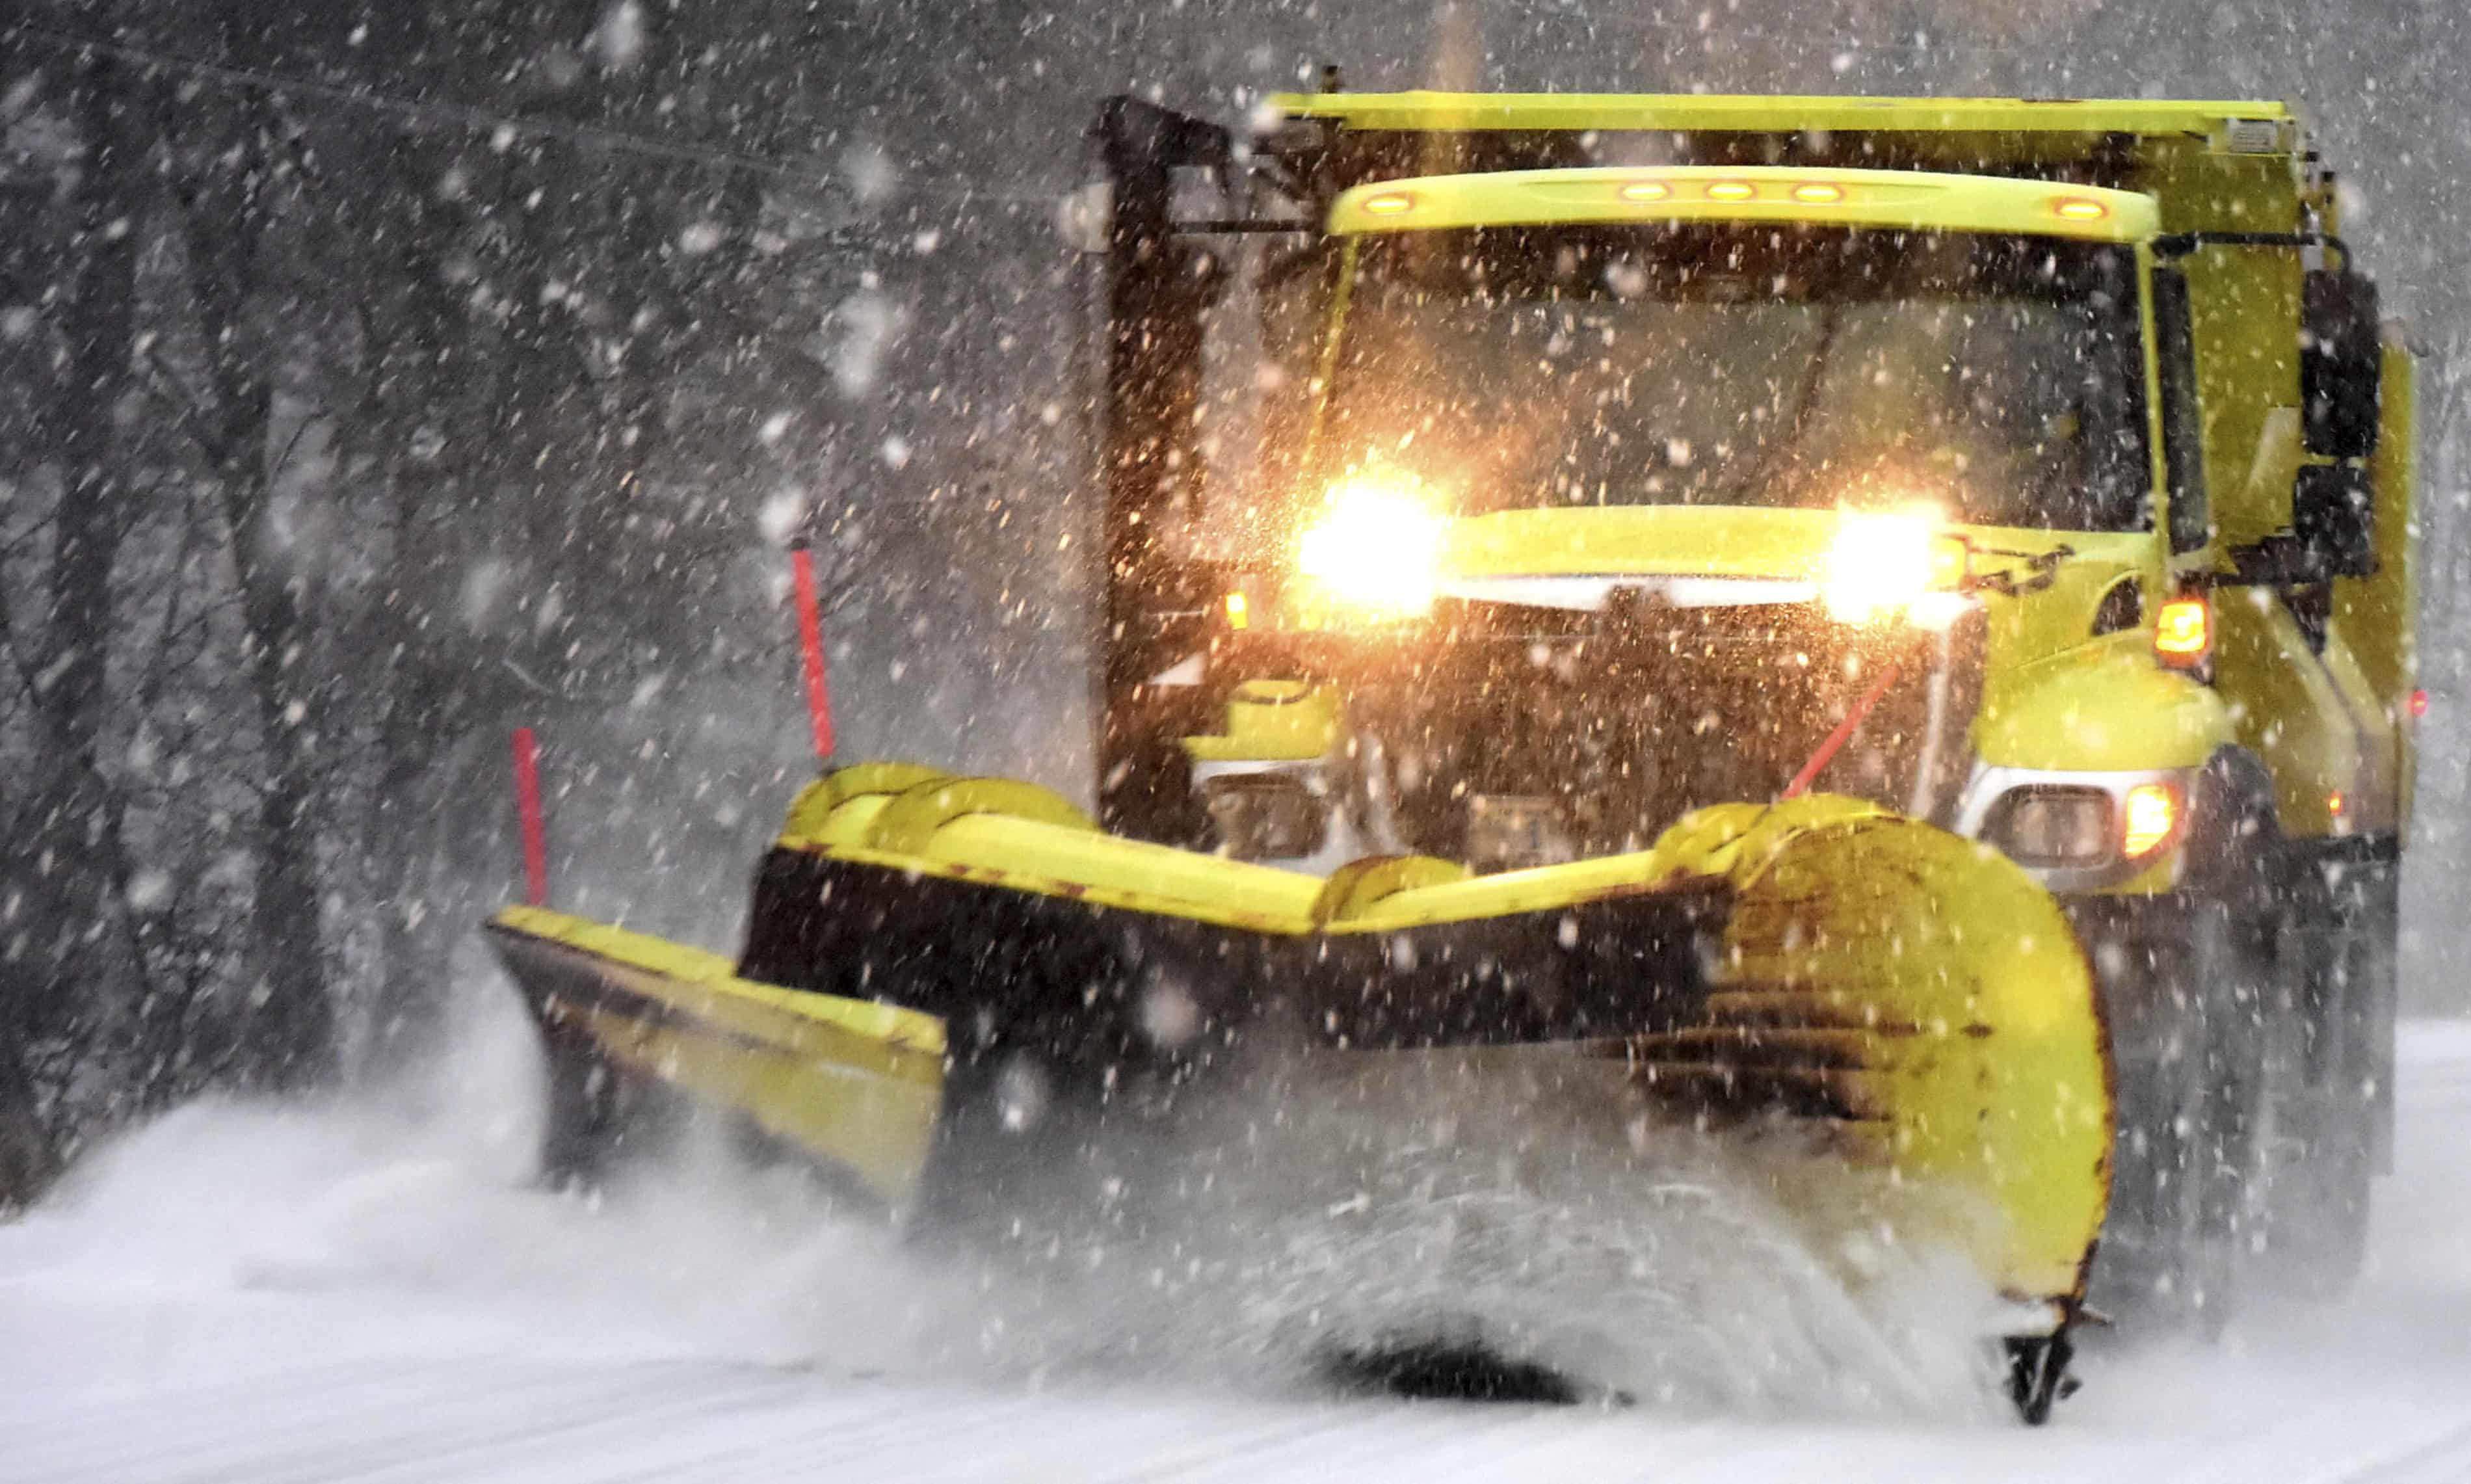 Major snowstorm in Colorado closes schools, offices and highways (theguardian.com)